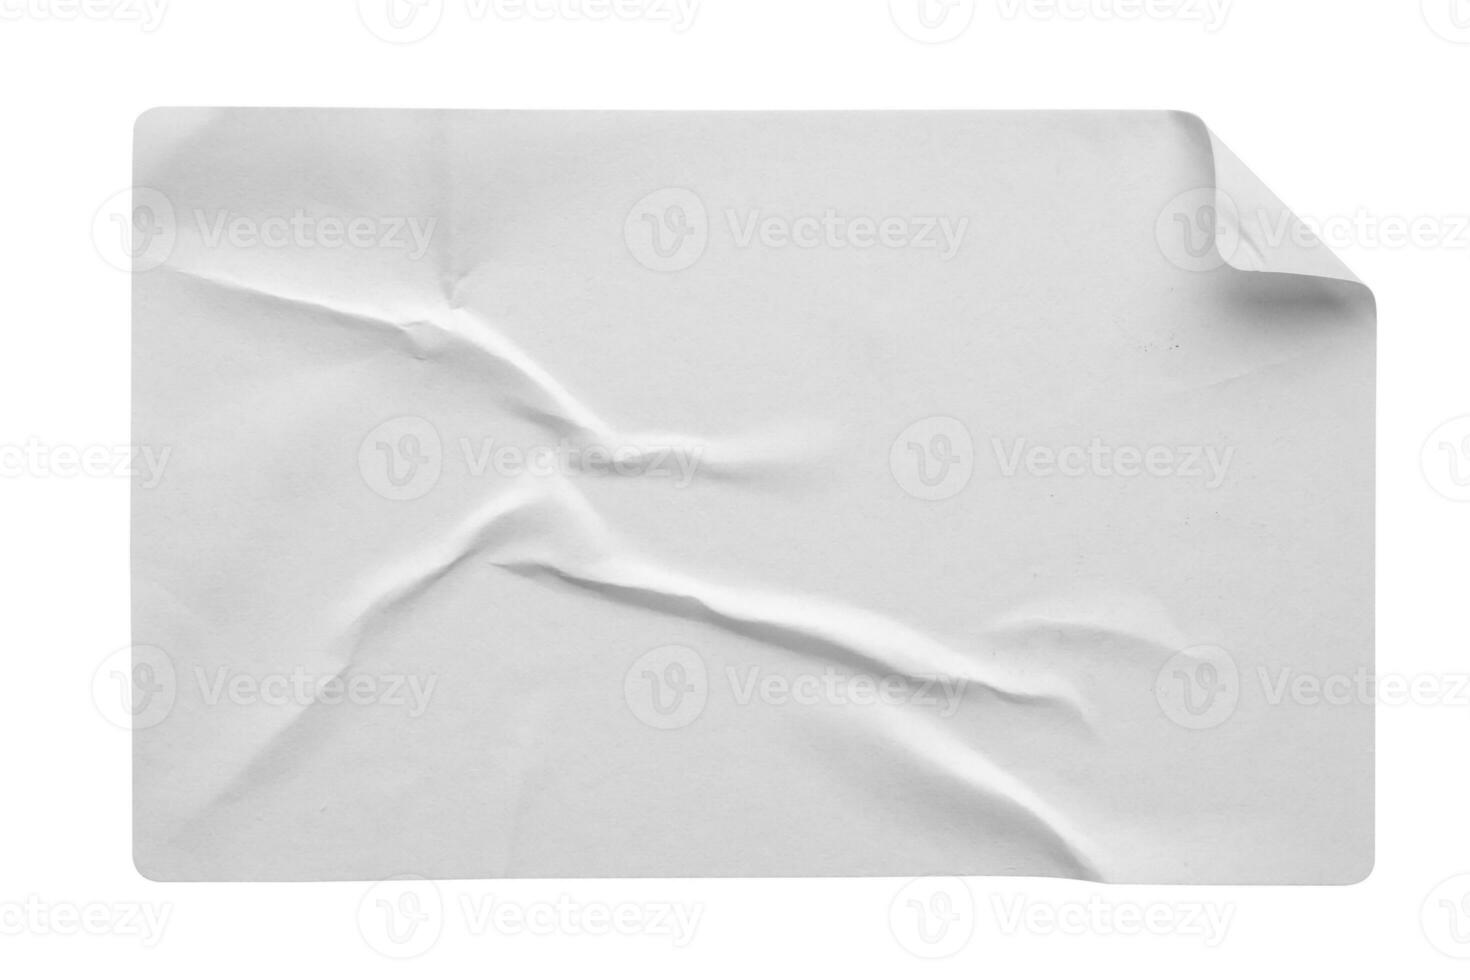 etiqueta de etiqueta de papel isolada no fundo branco foto